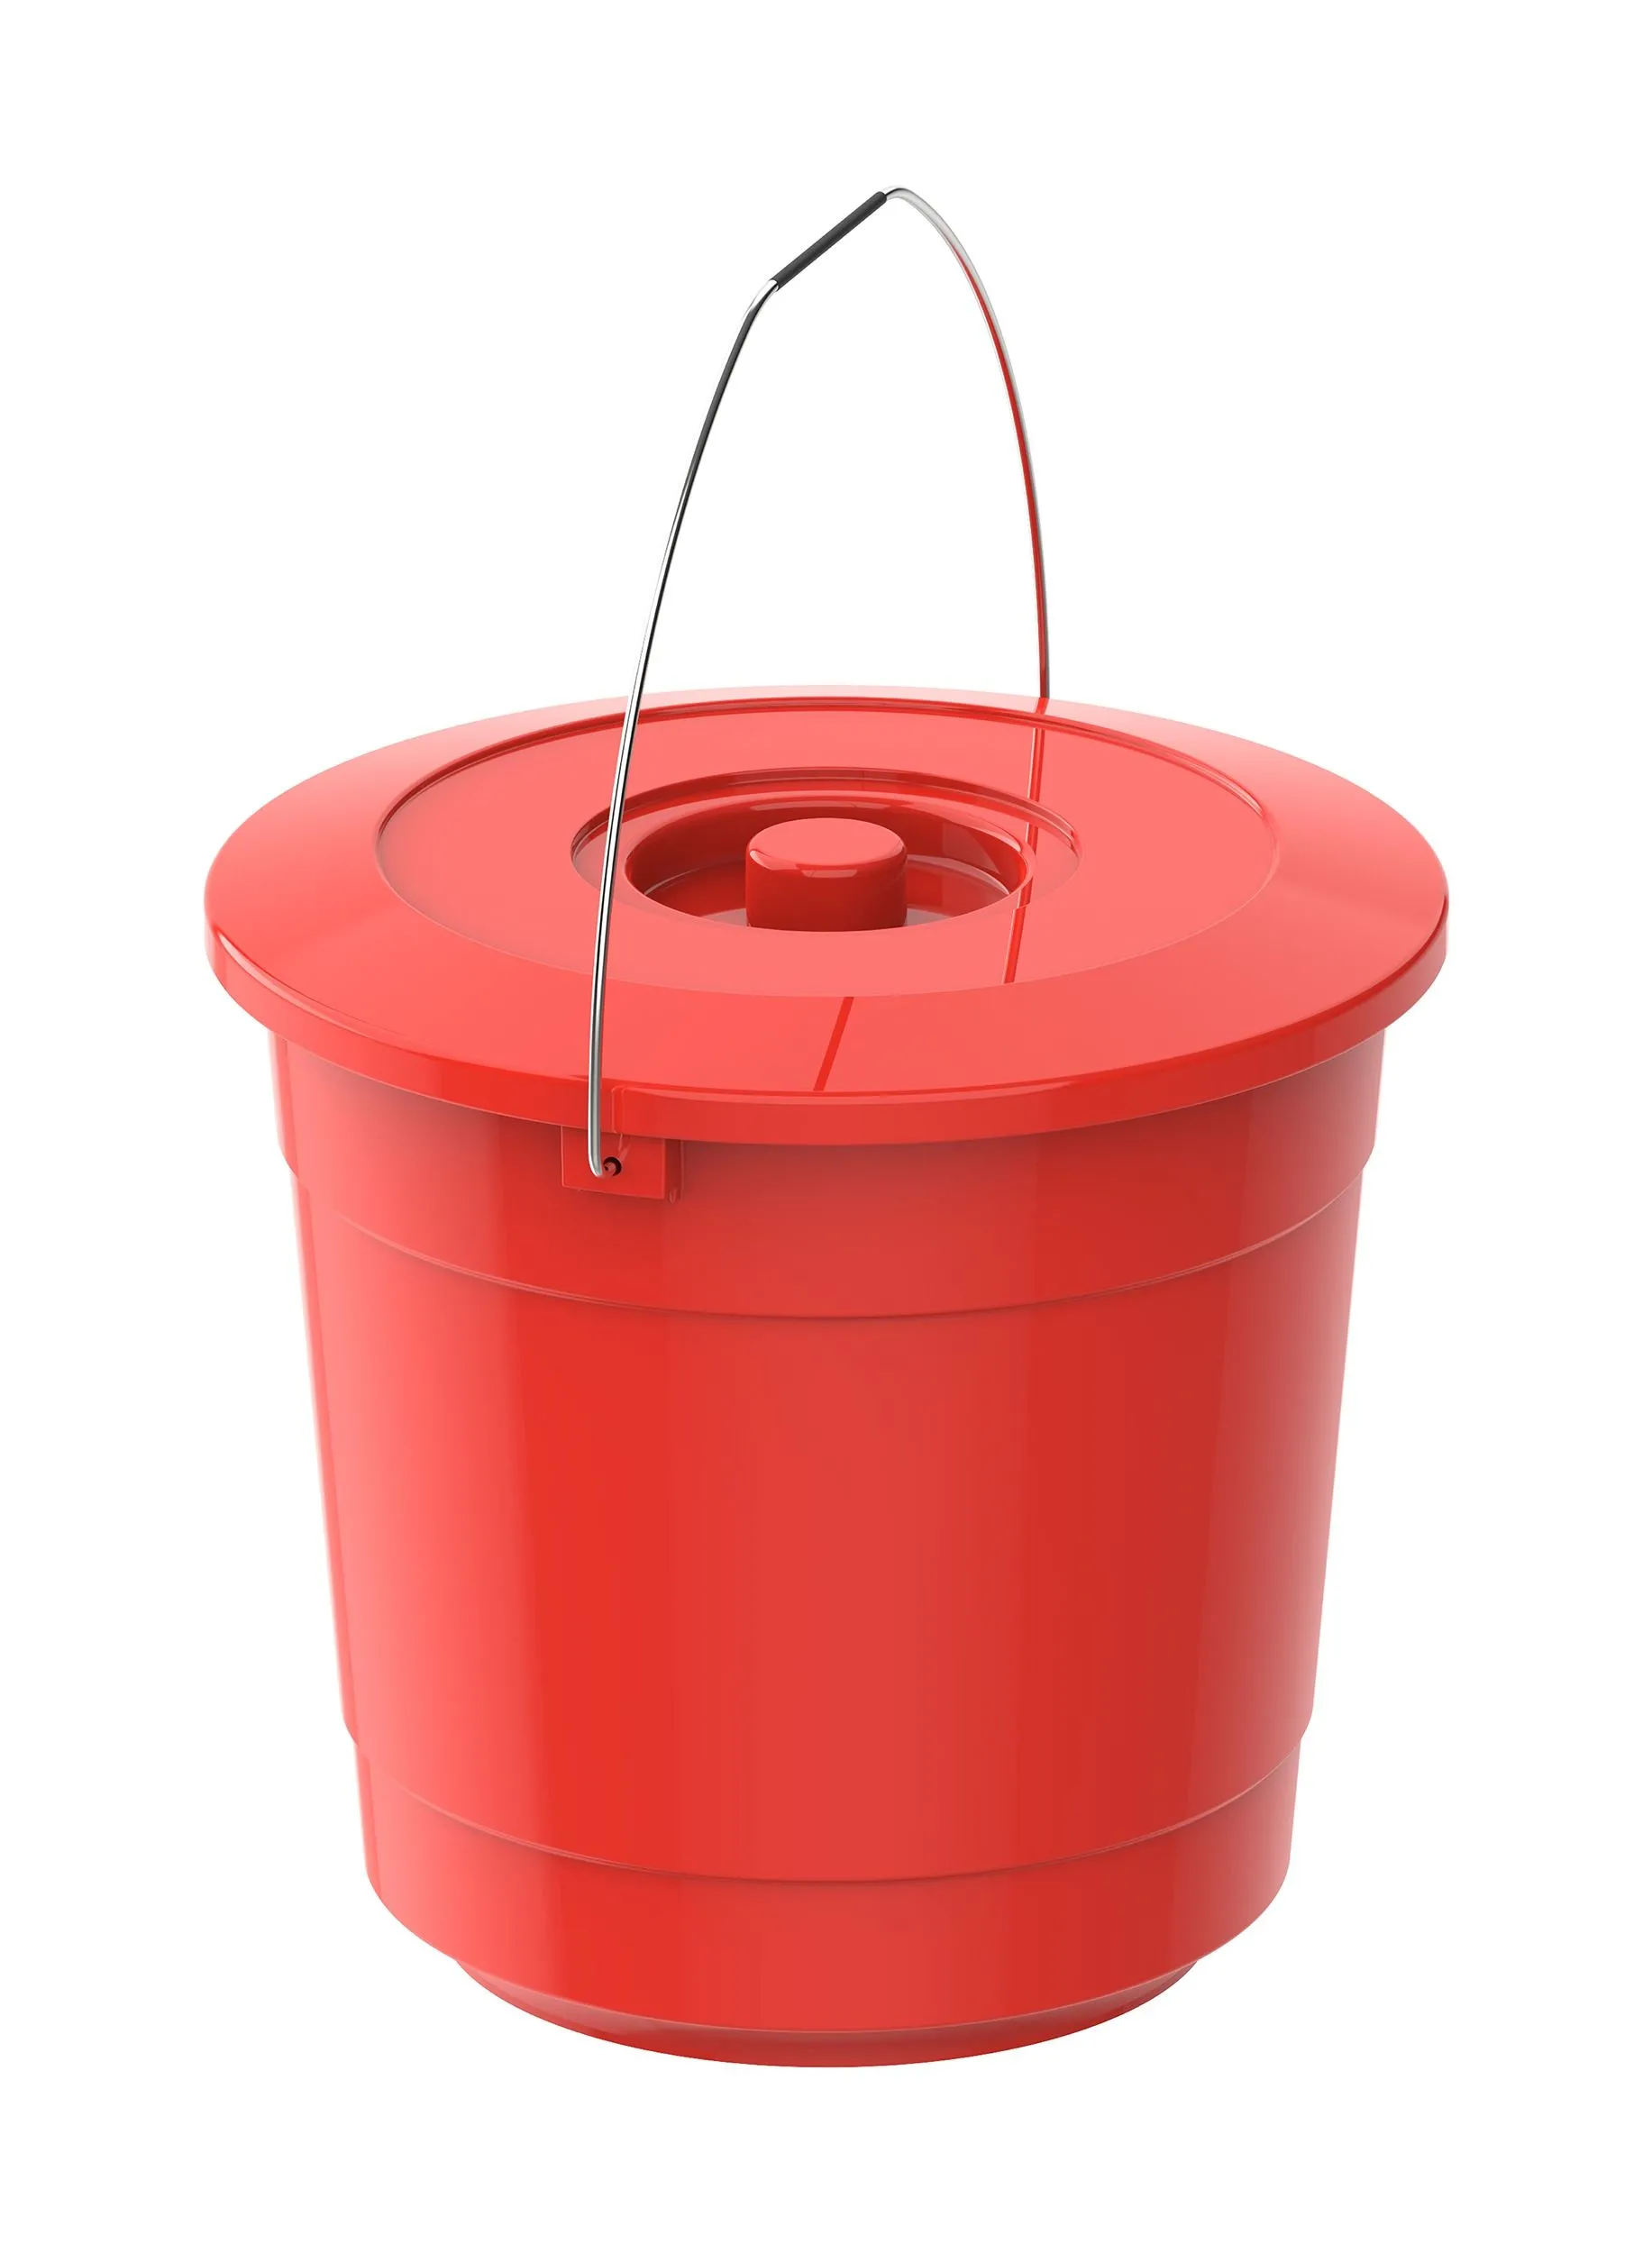 Cosmoplast EX 18L Round Plastic Bucket with Steel Handle